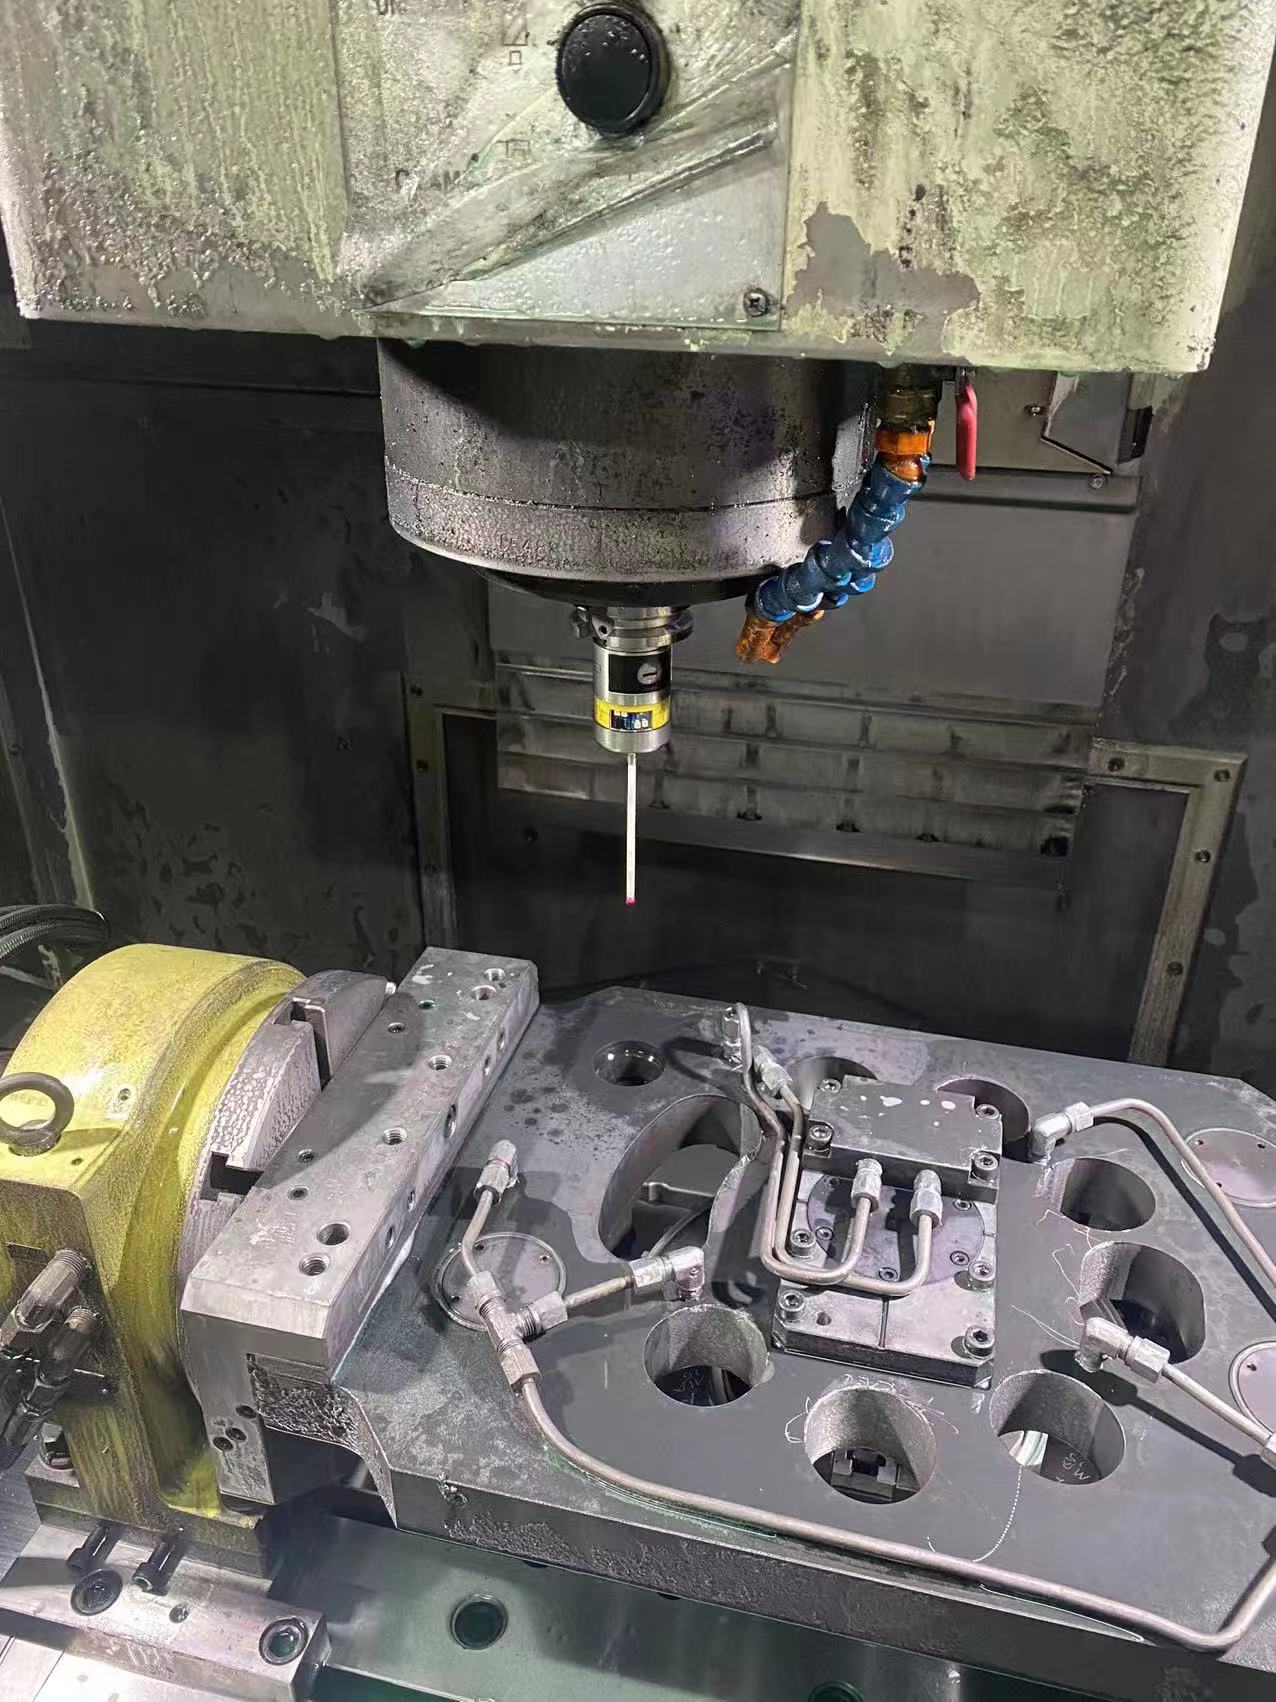 CNC center ultra-high precision machine tool na sumusukat sa CP41 (4)